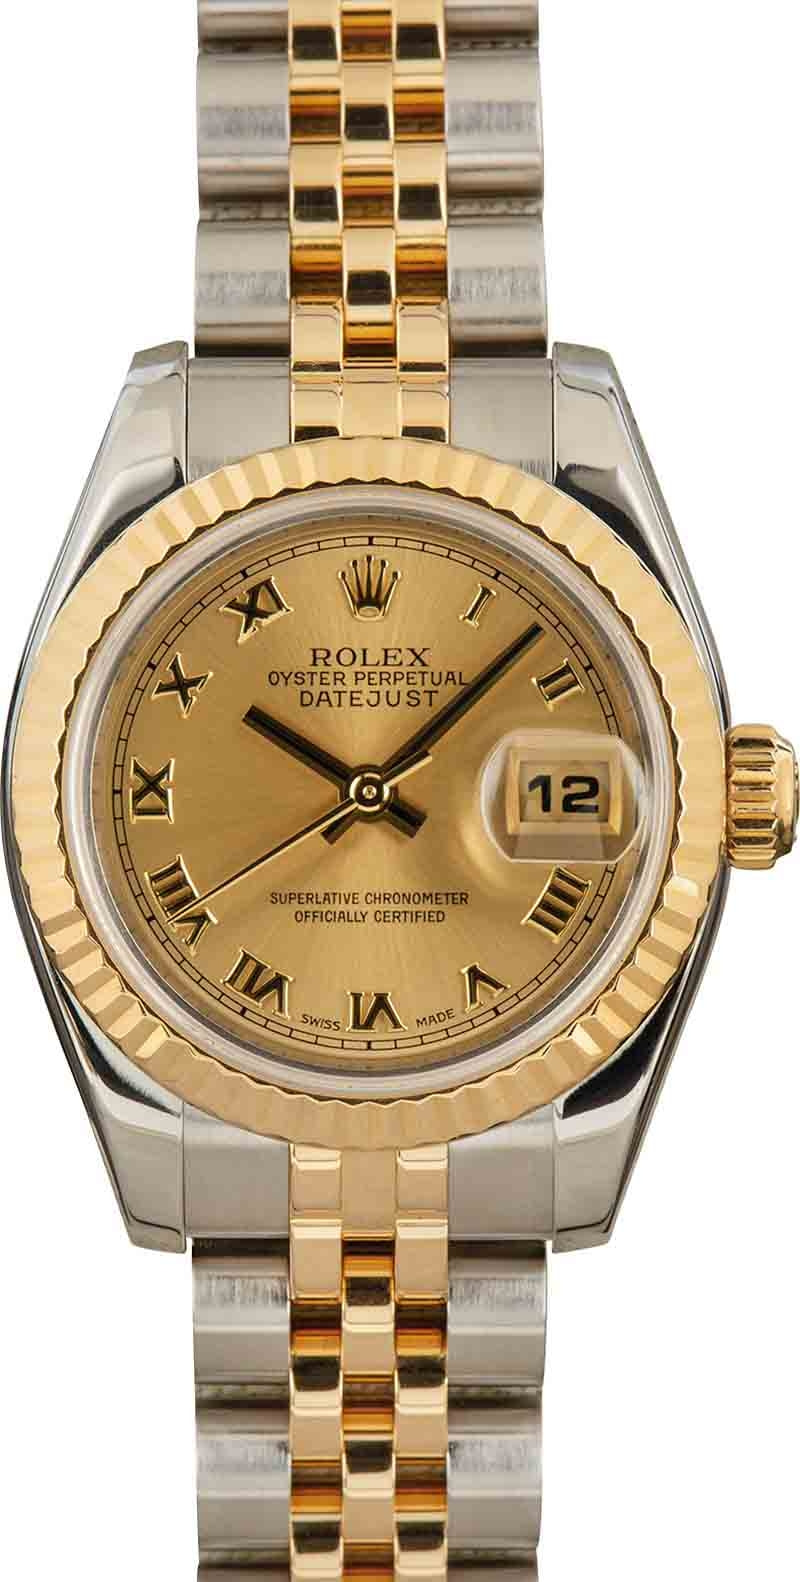 Buy Used Rolex 179173 | Bob's Watches - Sku: 179173